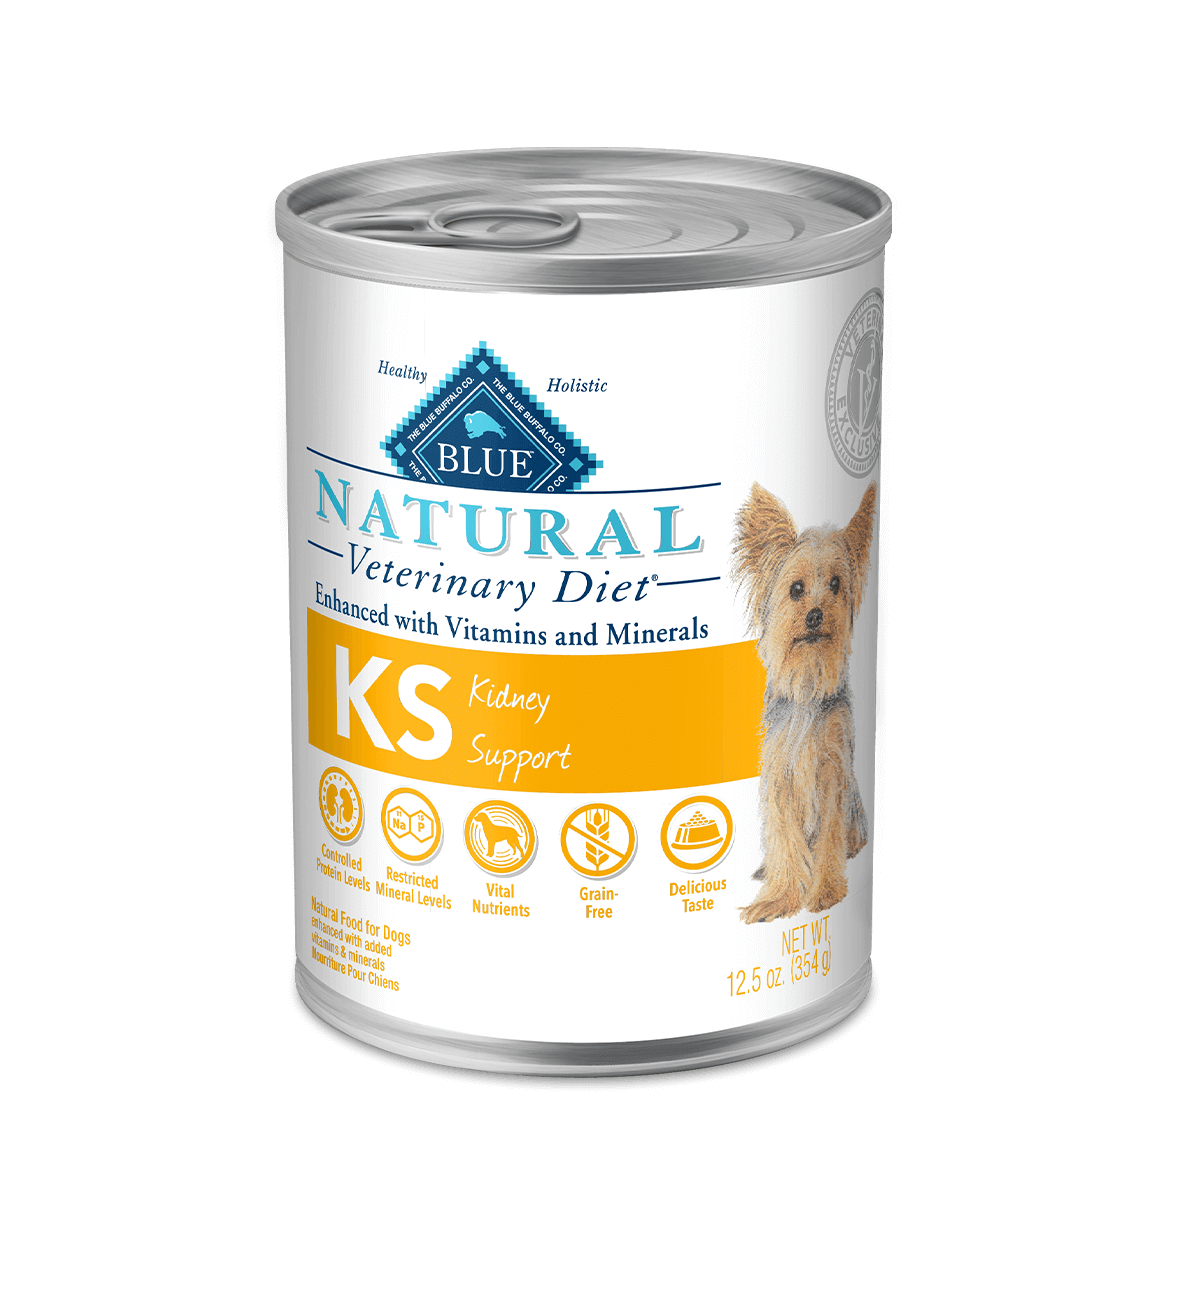 blue natural veterinary diet ks kidney support dog wet food